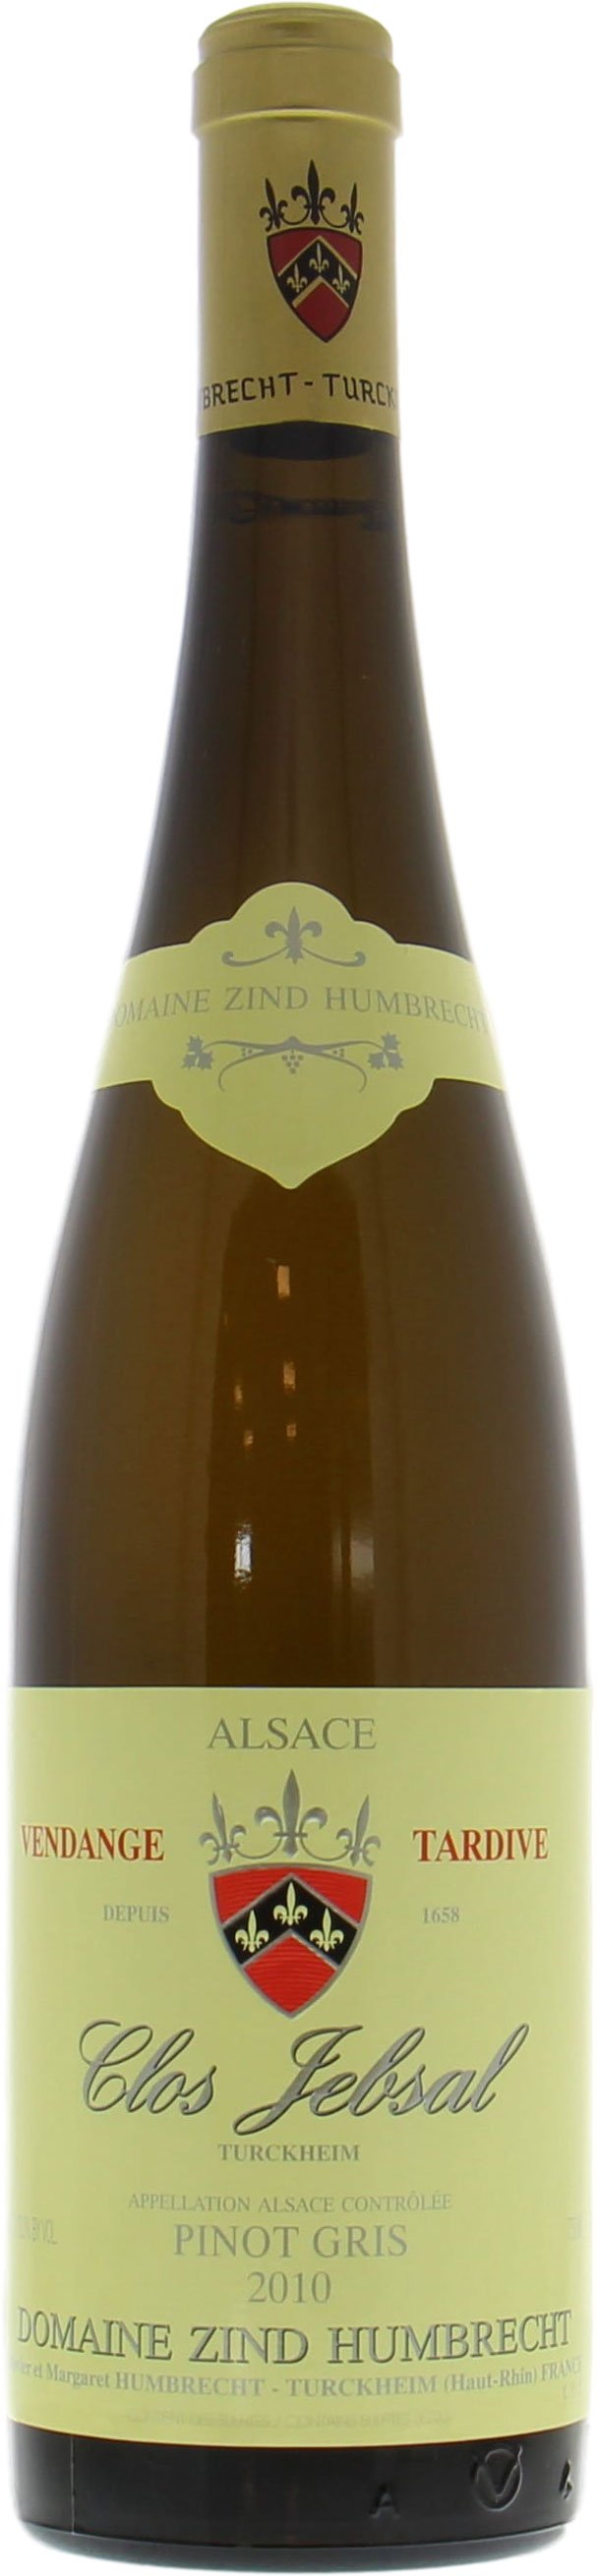 Zind Humbrecht - Pinot Gris Clos Jebsal Vendange Tardive 2010